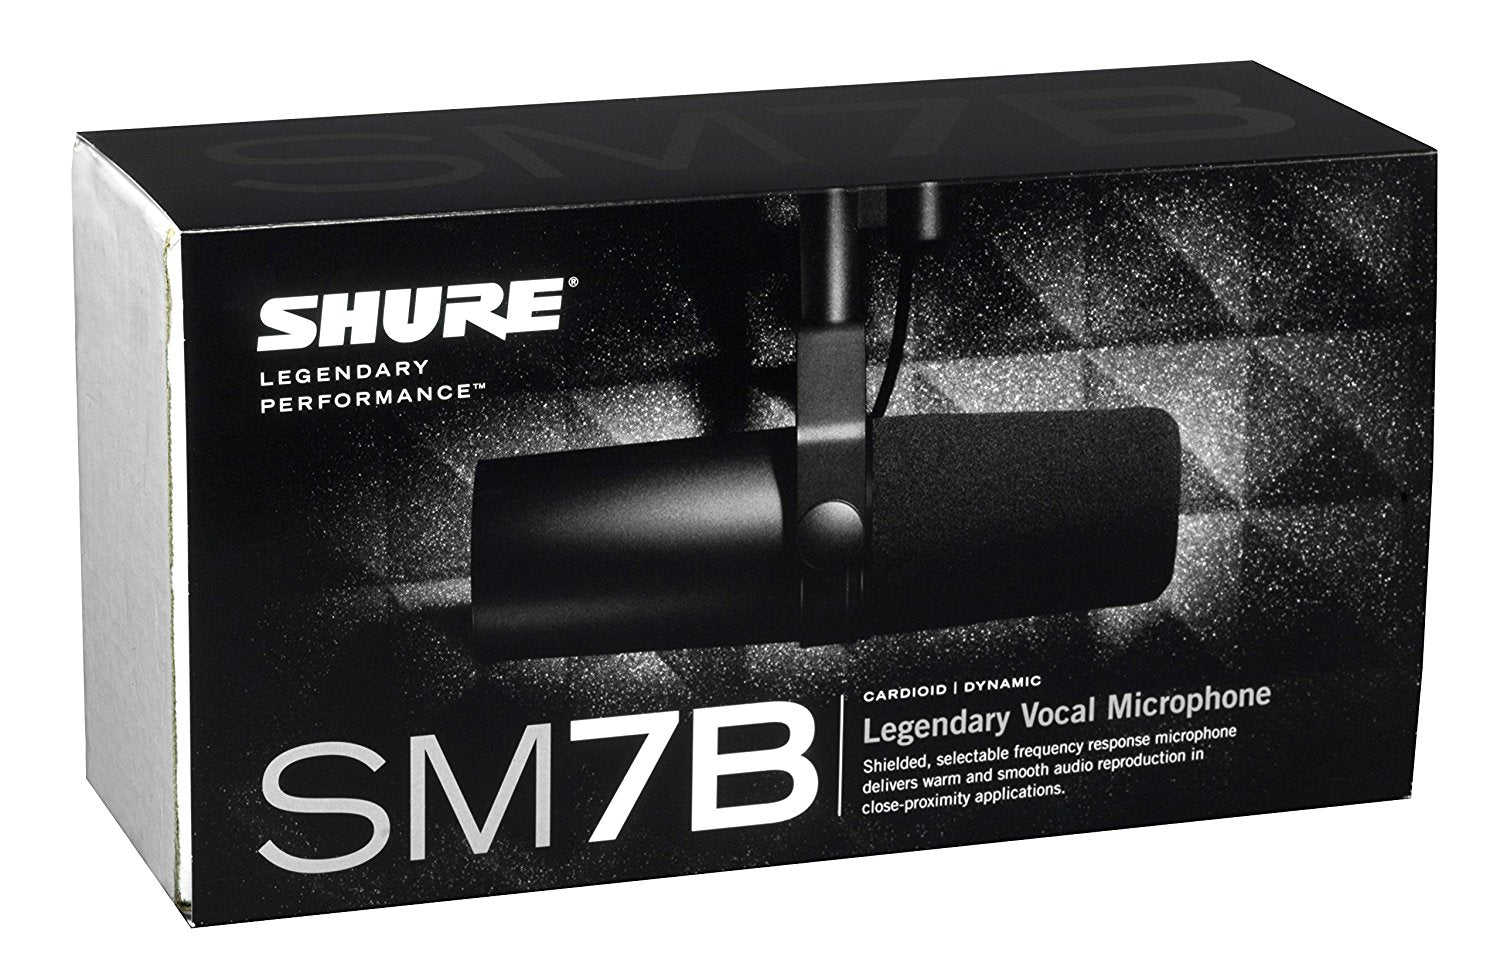 Shure SM7B Cardioid Dynamic Microphone Black - K&S Music Center LLC